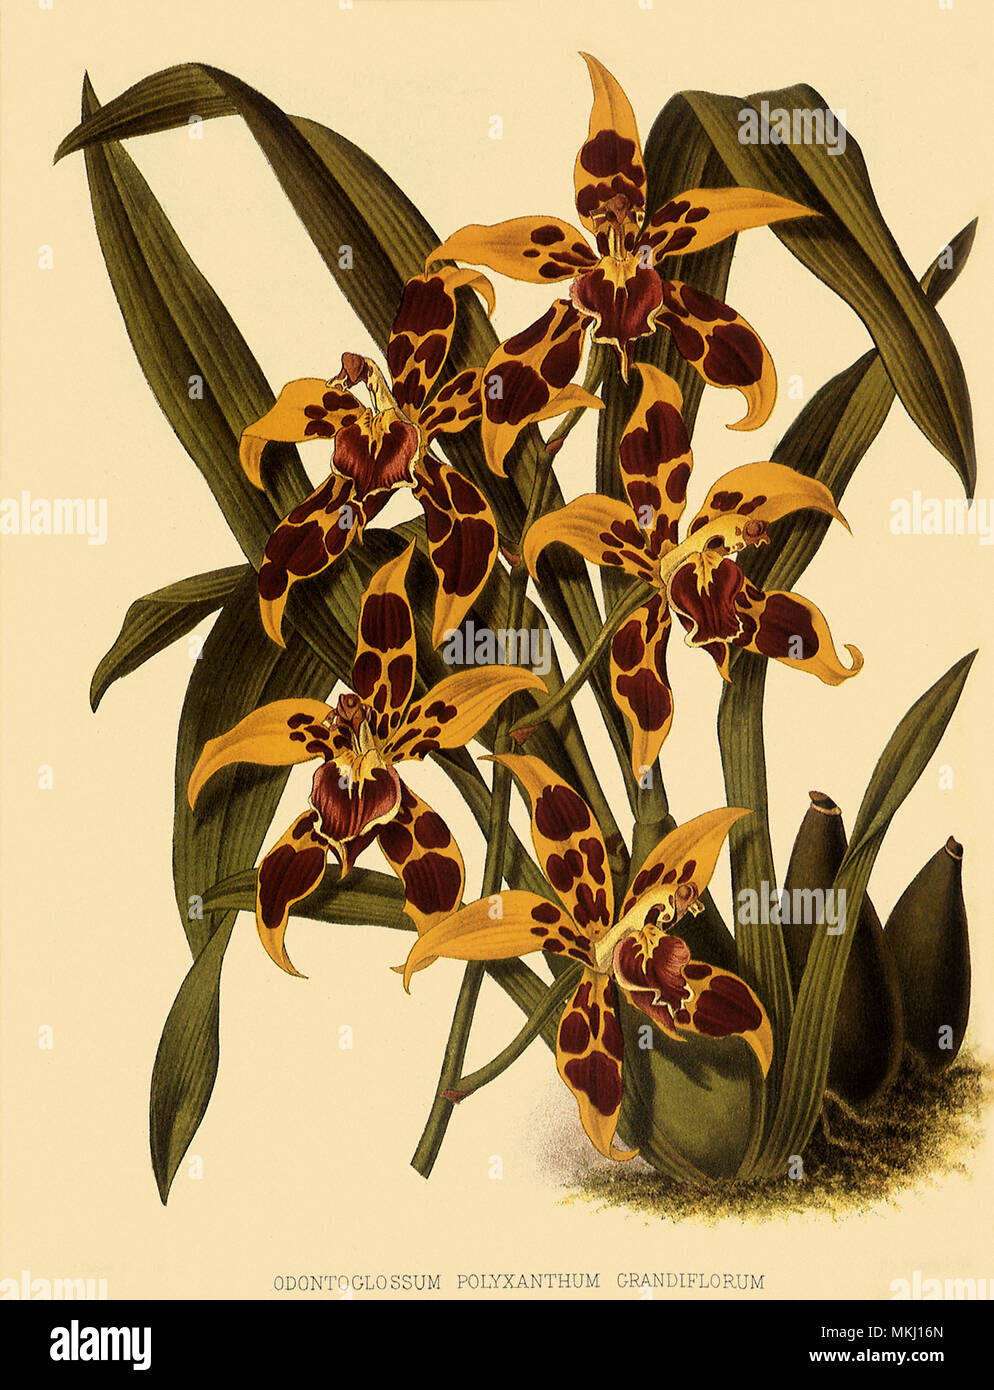 Odontoglossum Polyxanthum var. Grandiflorum Stock Photo